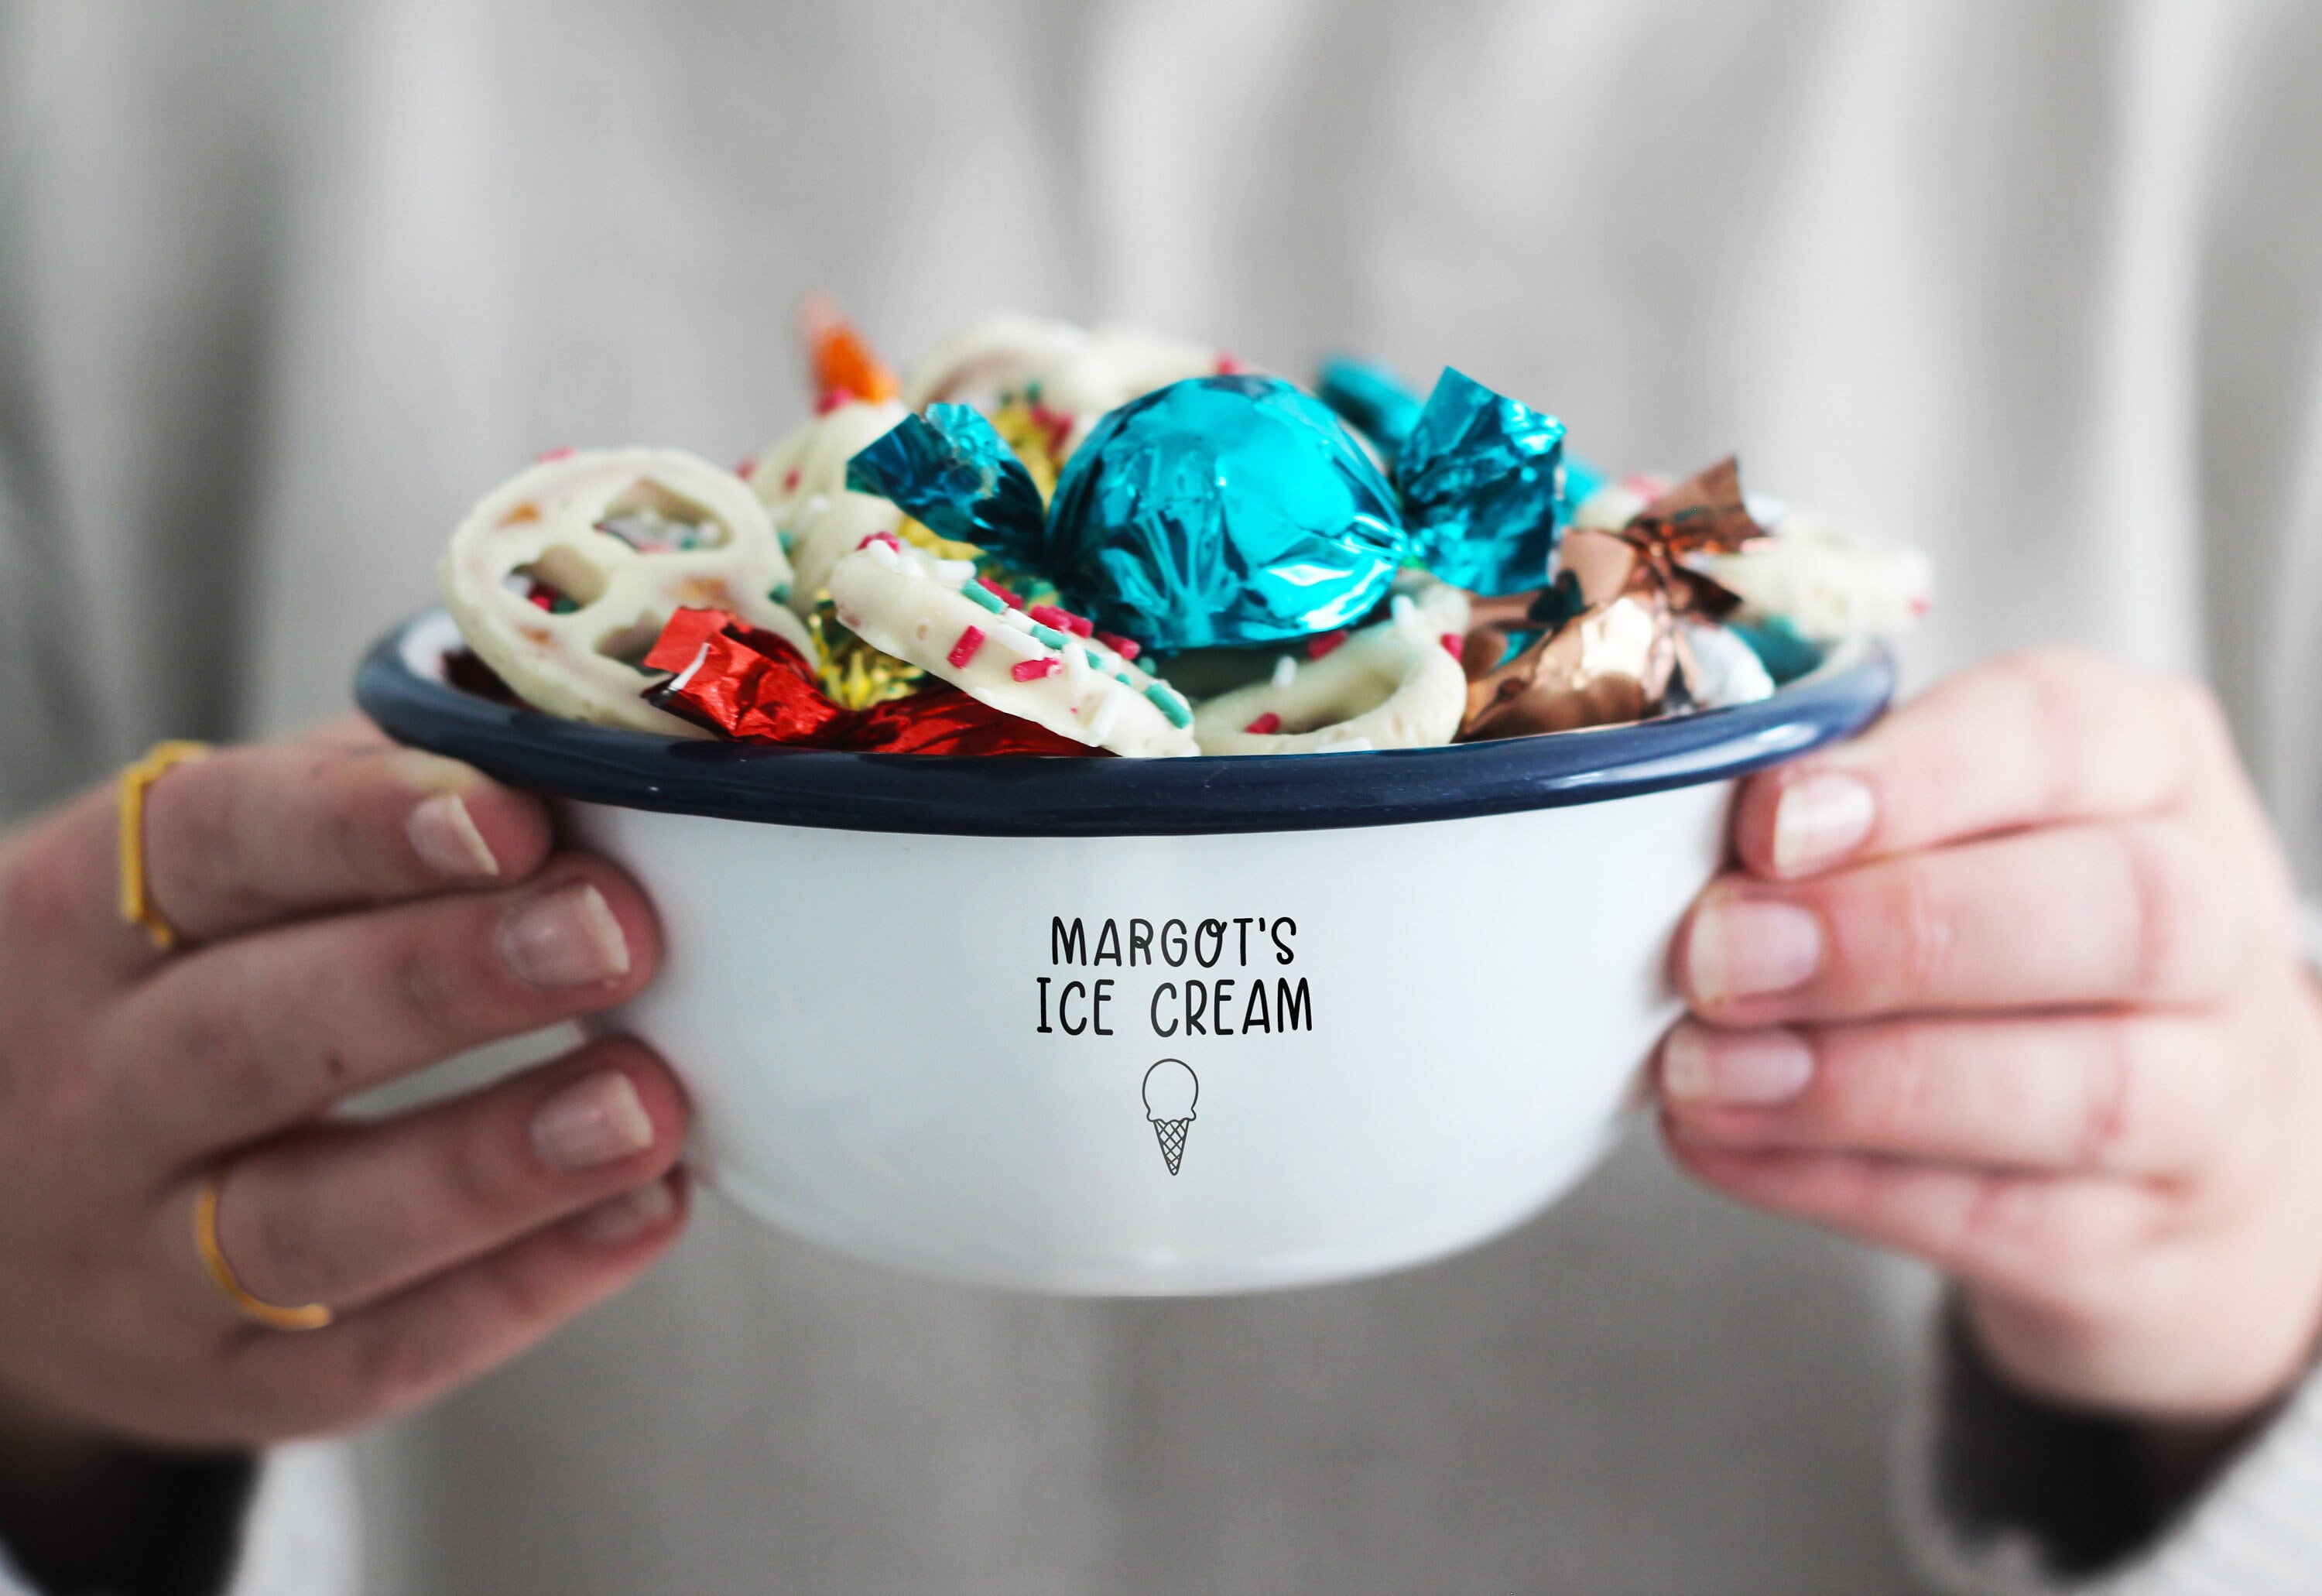 Personalised Enamel Ice Cream Bowl 